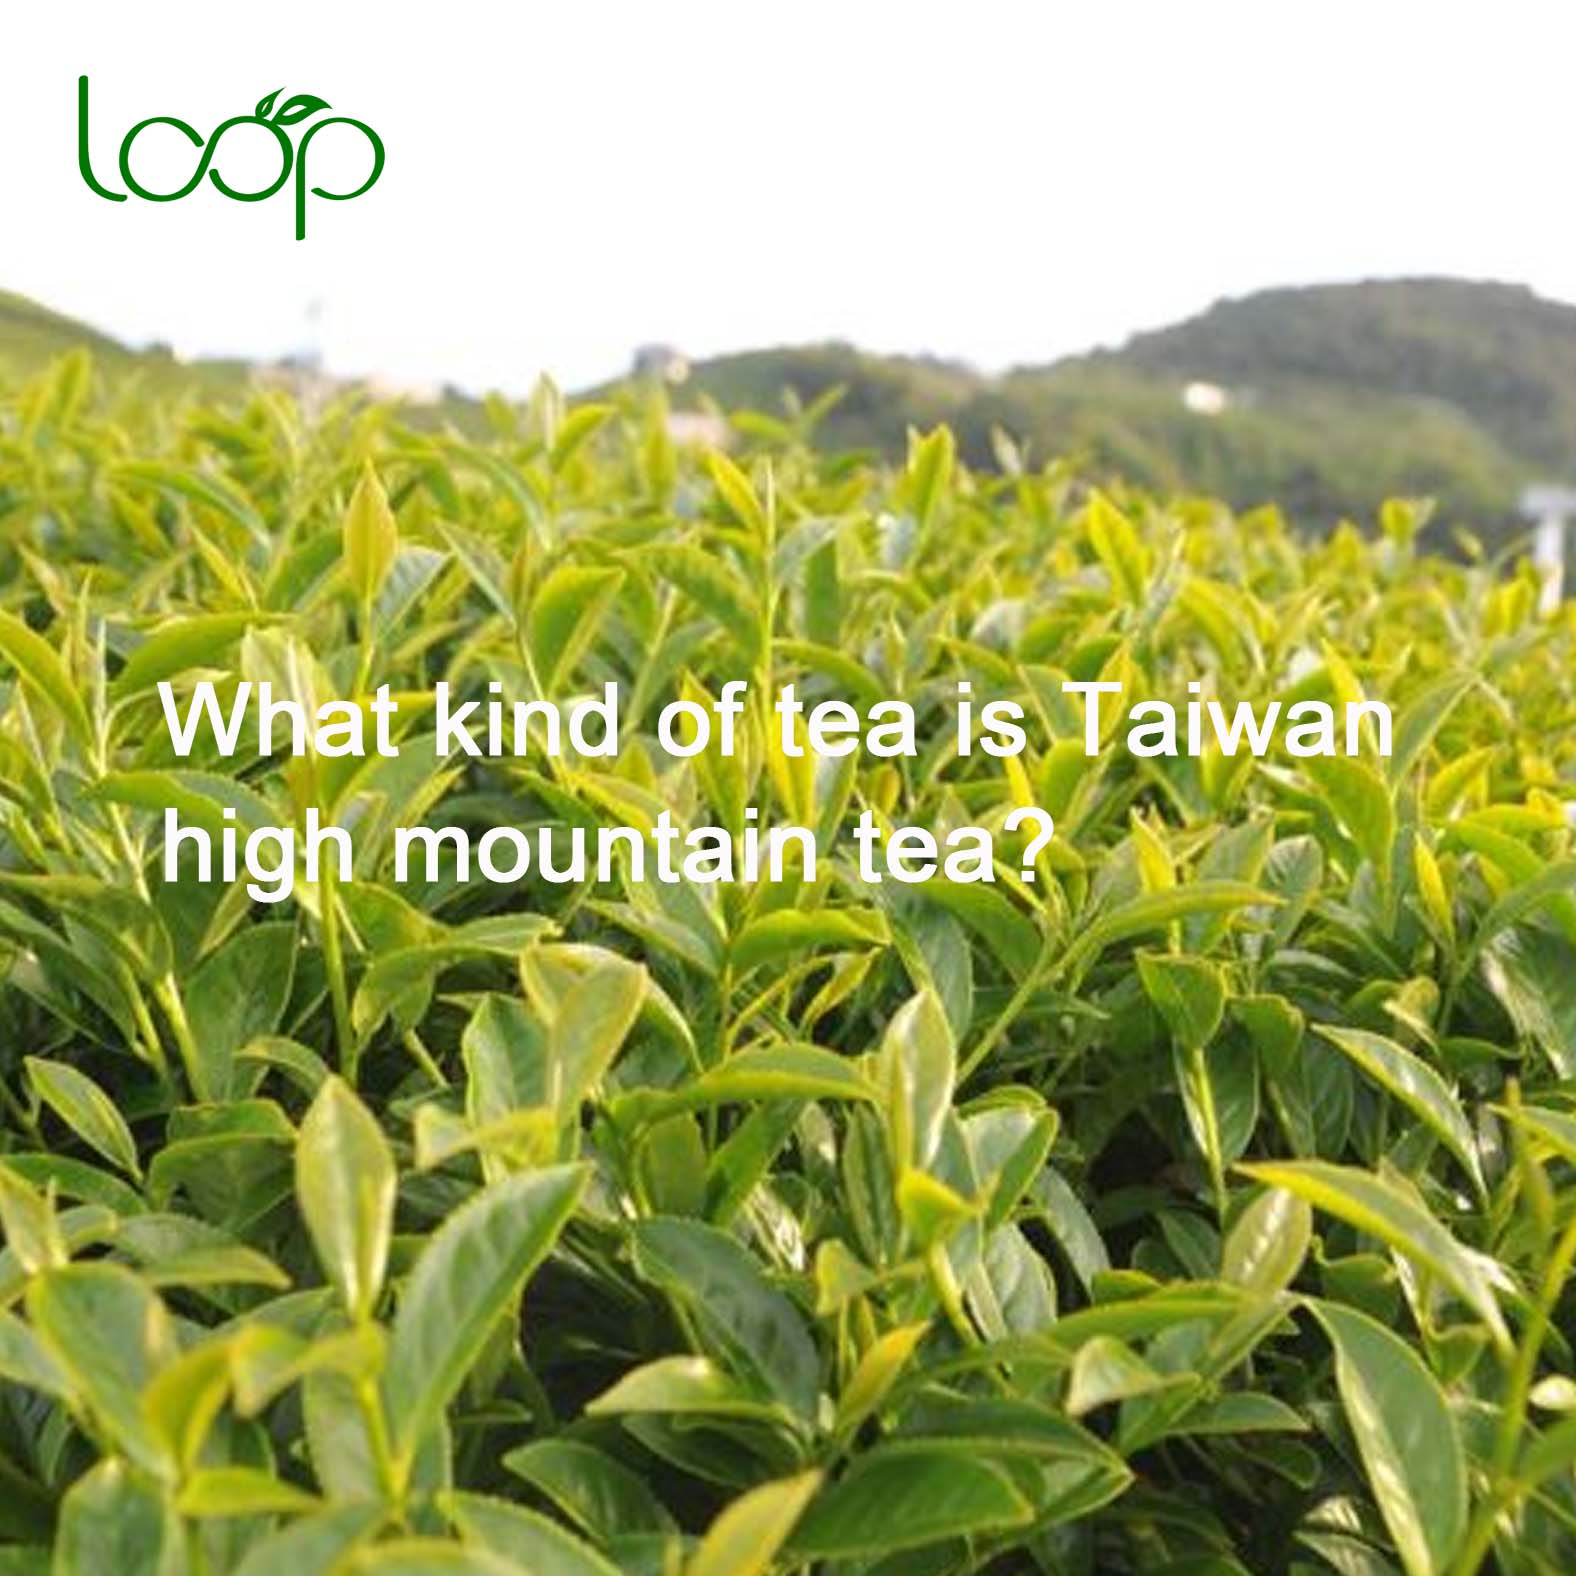 What kind of tea is Taiwan high mountain tea?